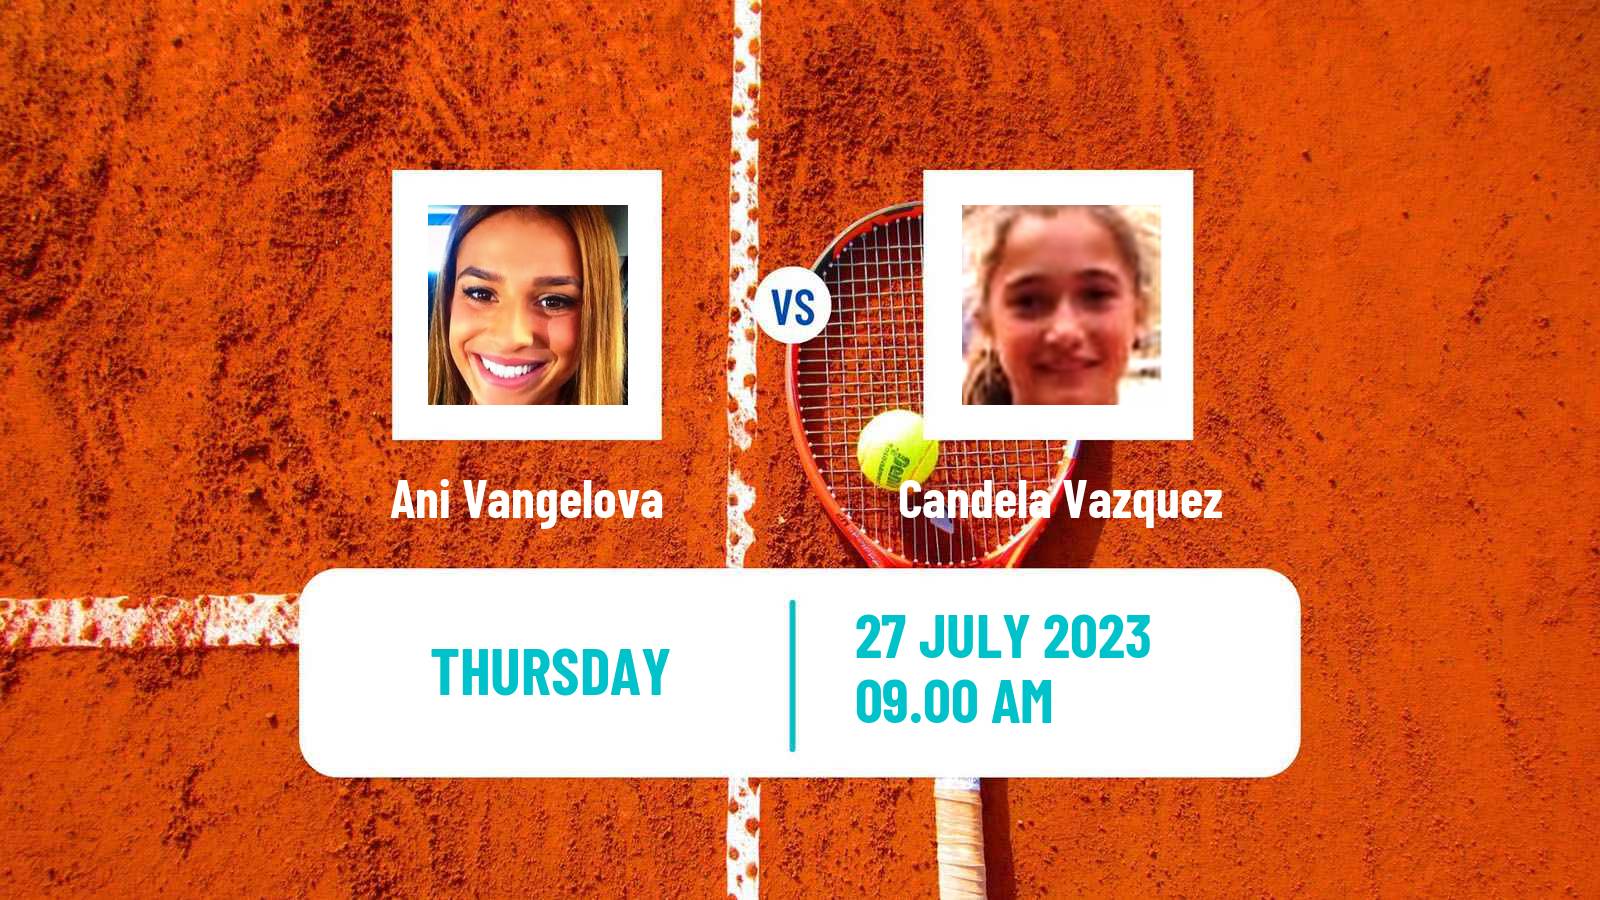 Tennis ITF W25 Bragado Women Ani Vangelova - Candela Vazquez